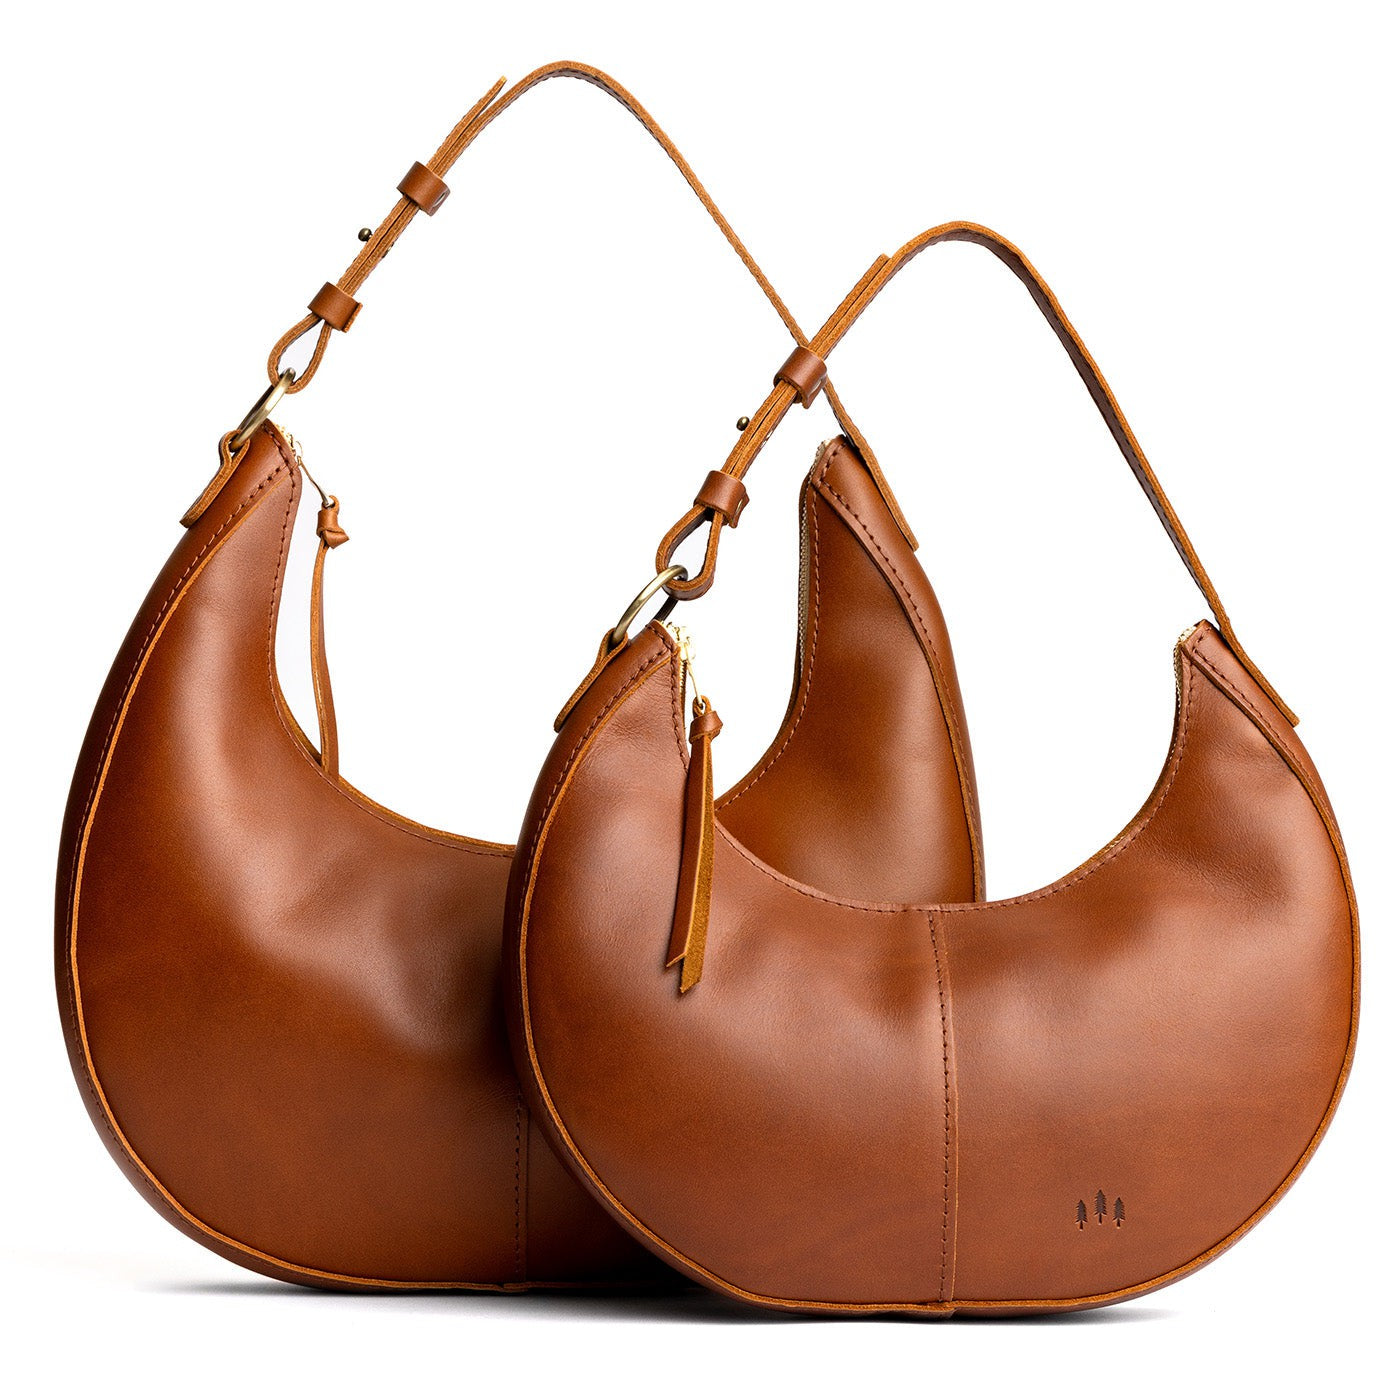 Honey | Crescent shaped shoulder bag with zipper closure and adjustable strap